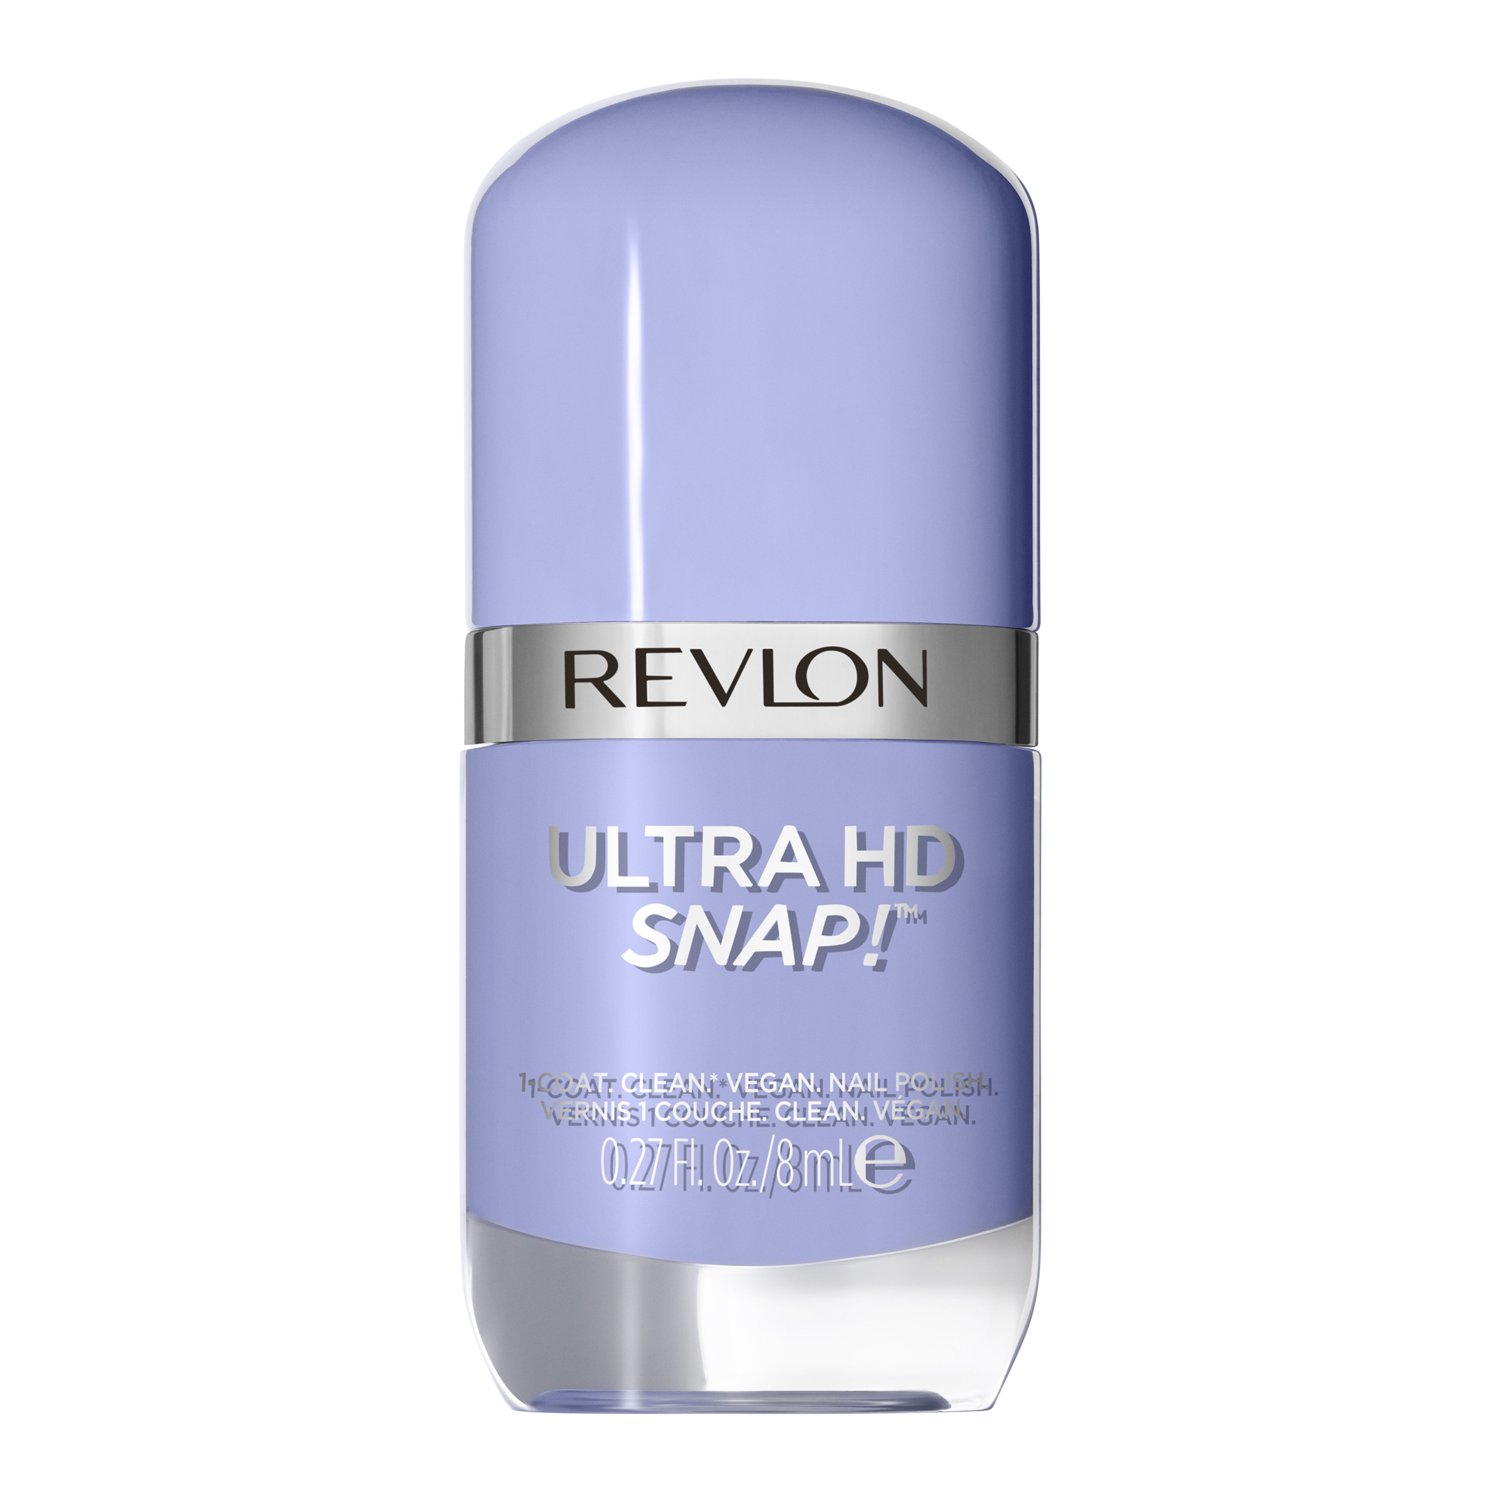 Revlon Ultra HD Snap Vegan Glossy Nail Polish, 016 Get Real, 0.27 fl oz Bottle - image 1 of 14